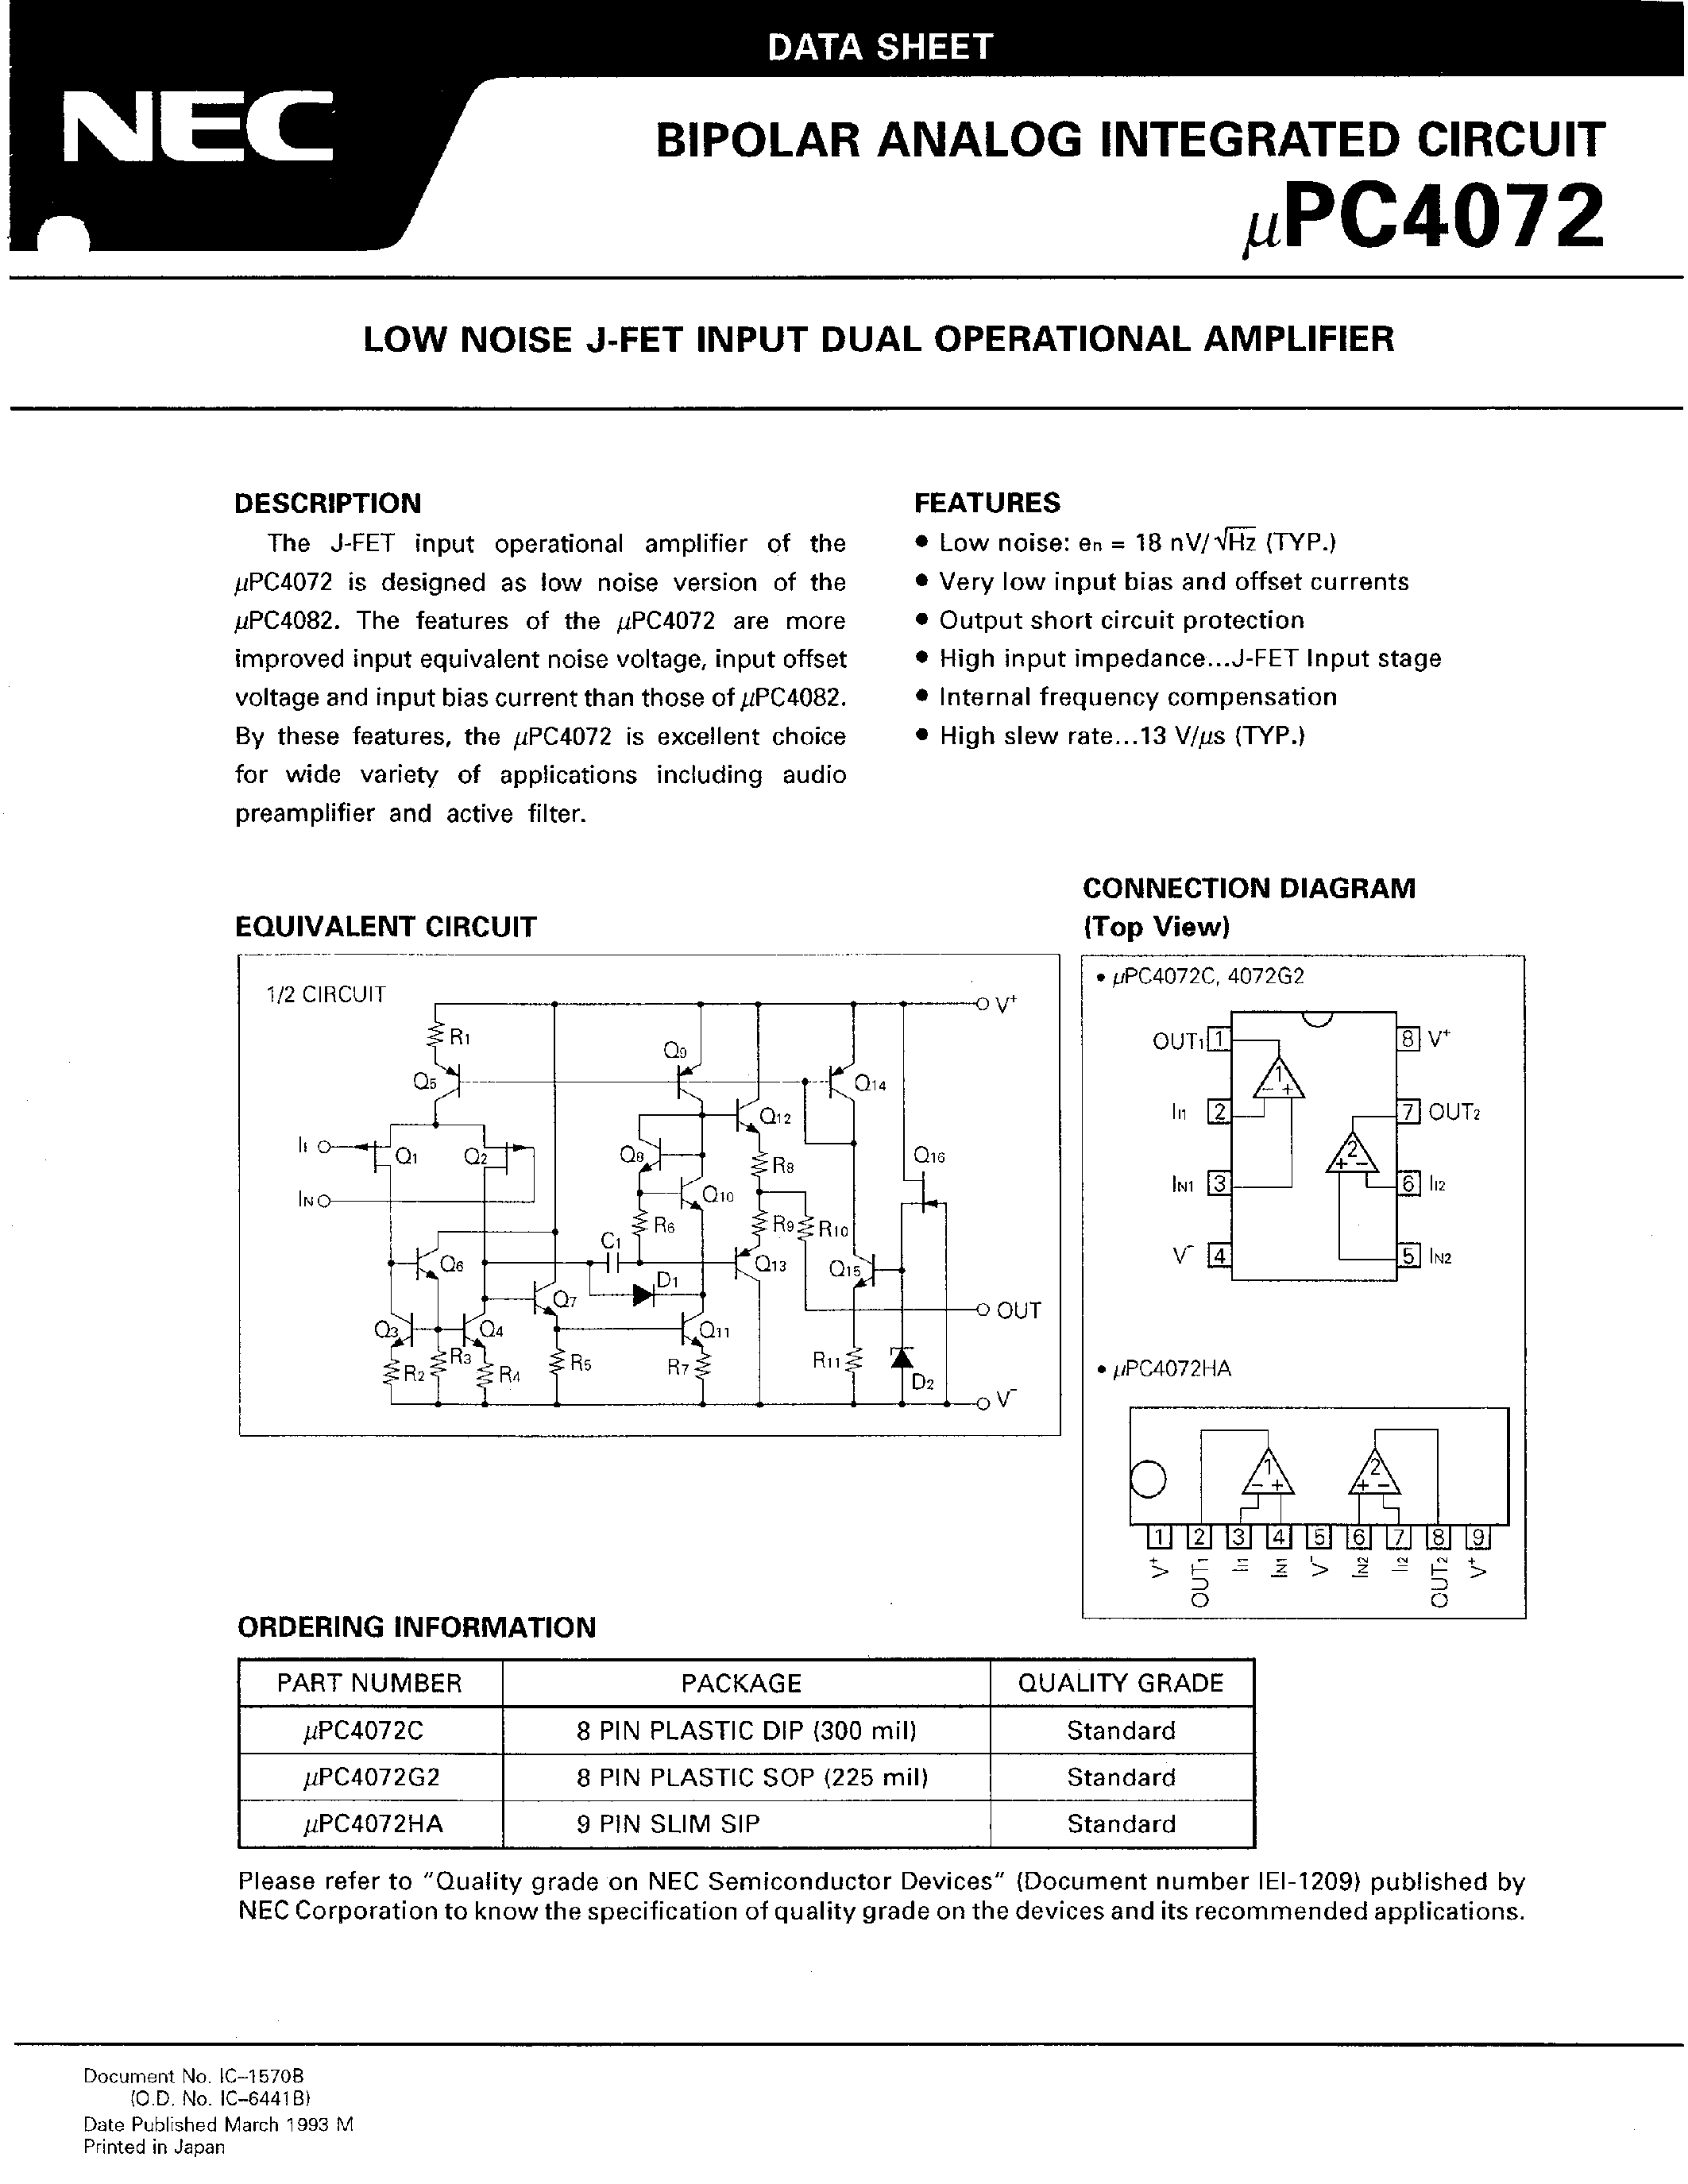 Даташит UPC4072C - LOW NOISE J-FET INPUT DUAL OPERATIONAL AMPLIFIER страница 1